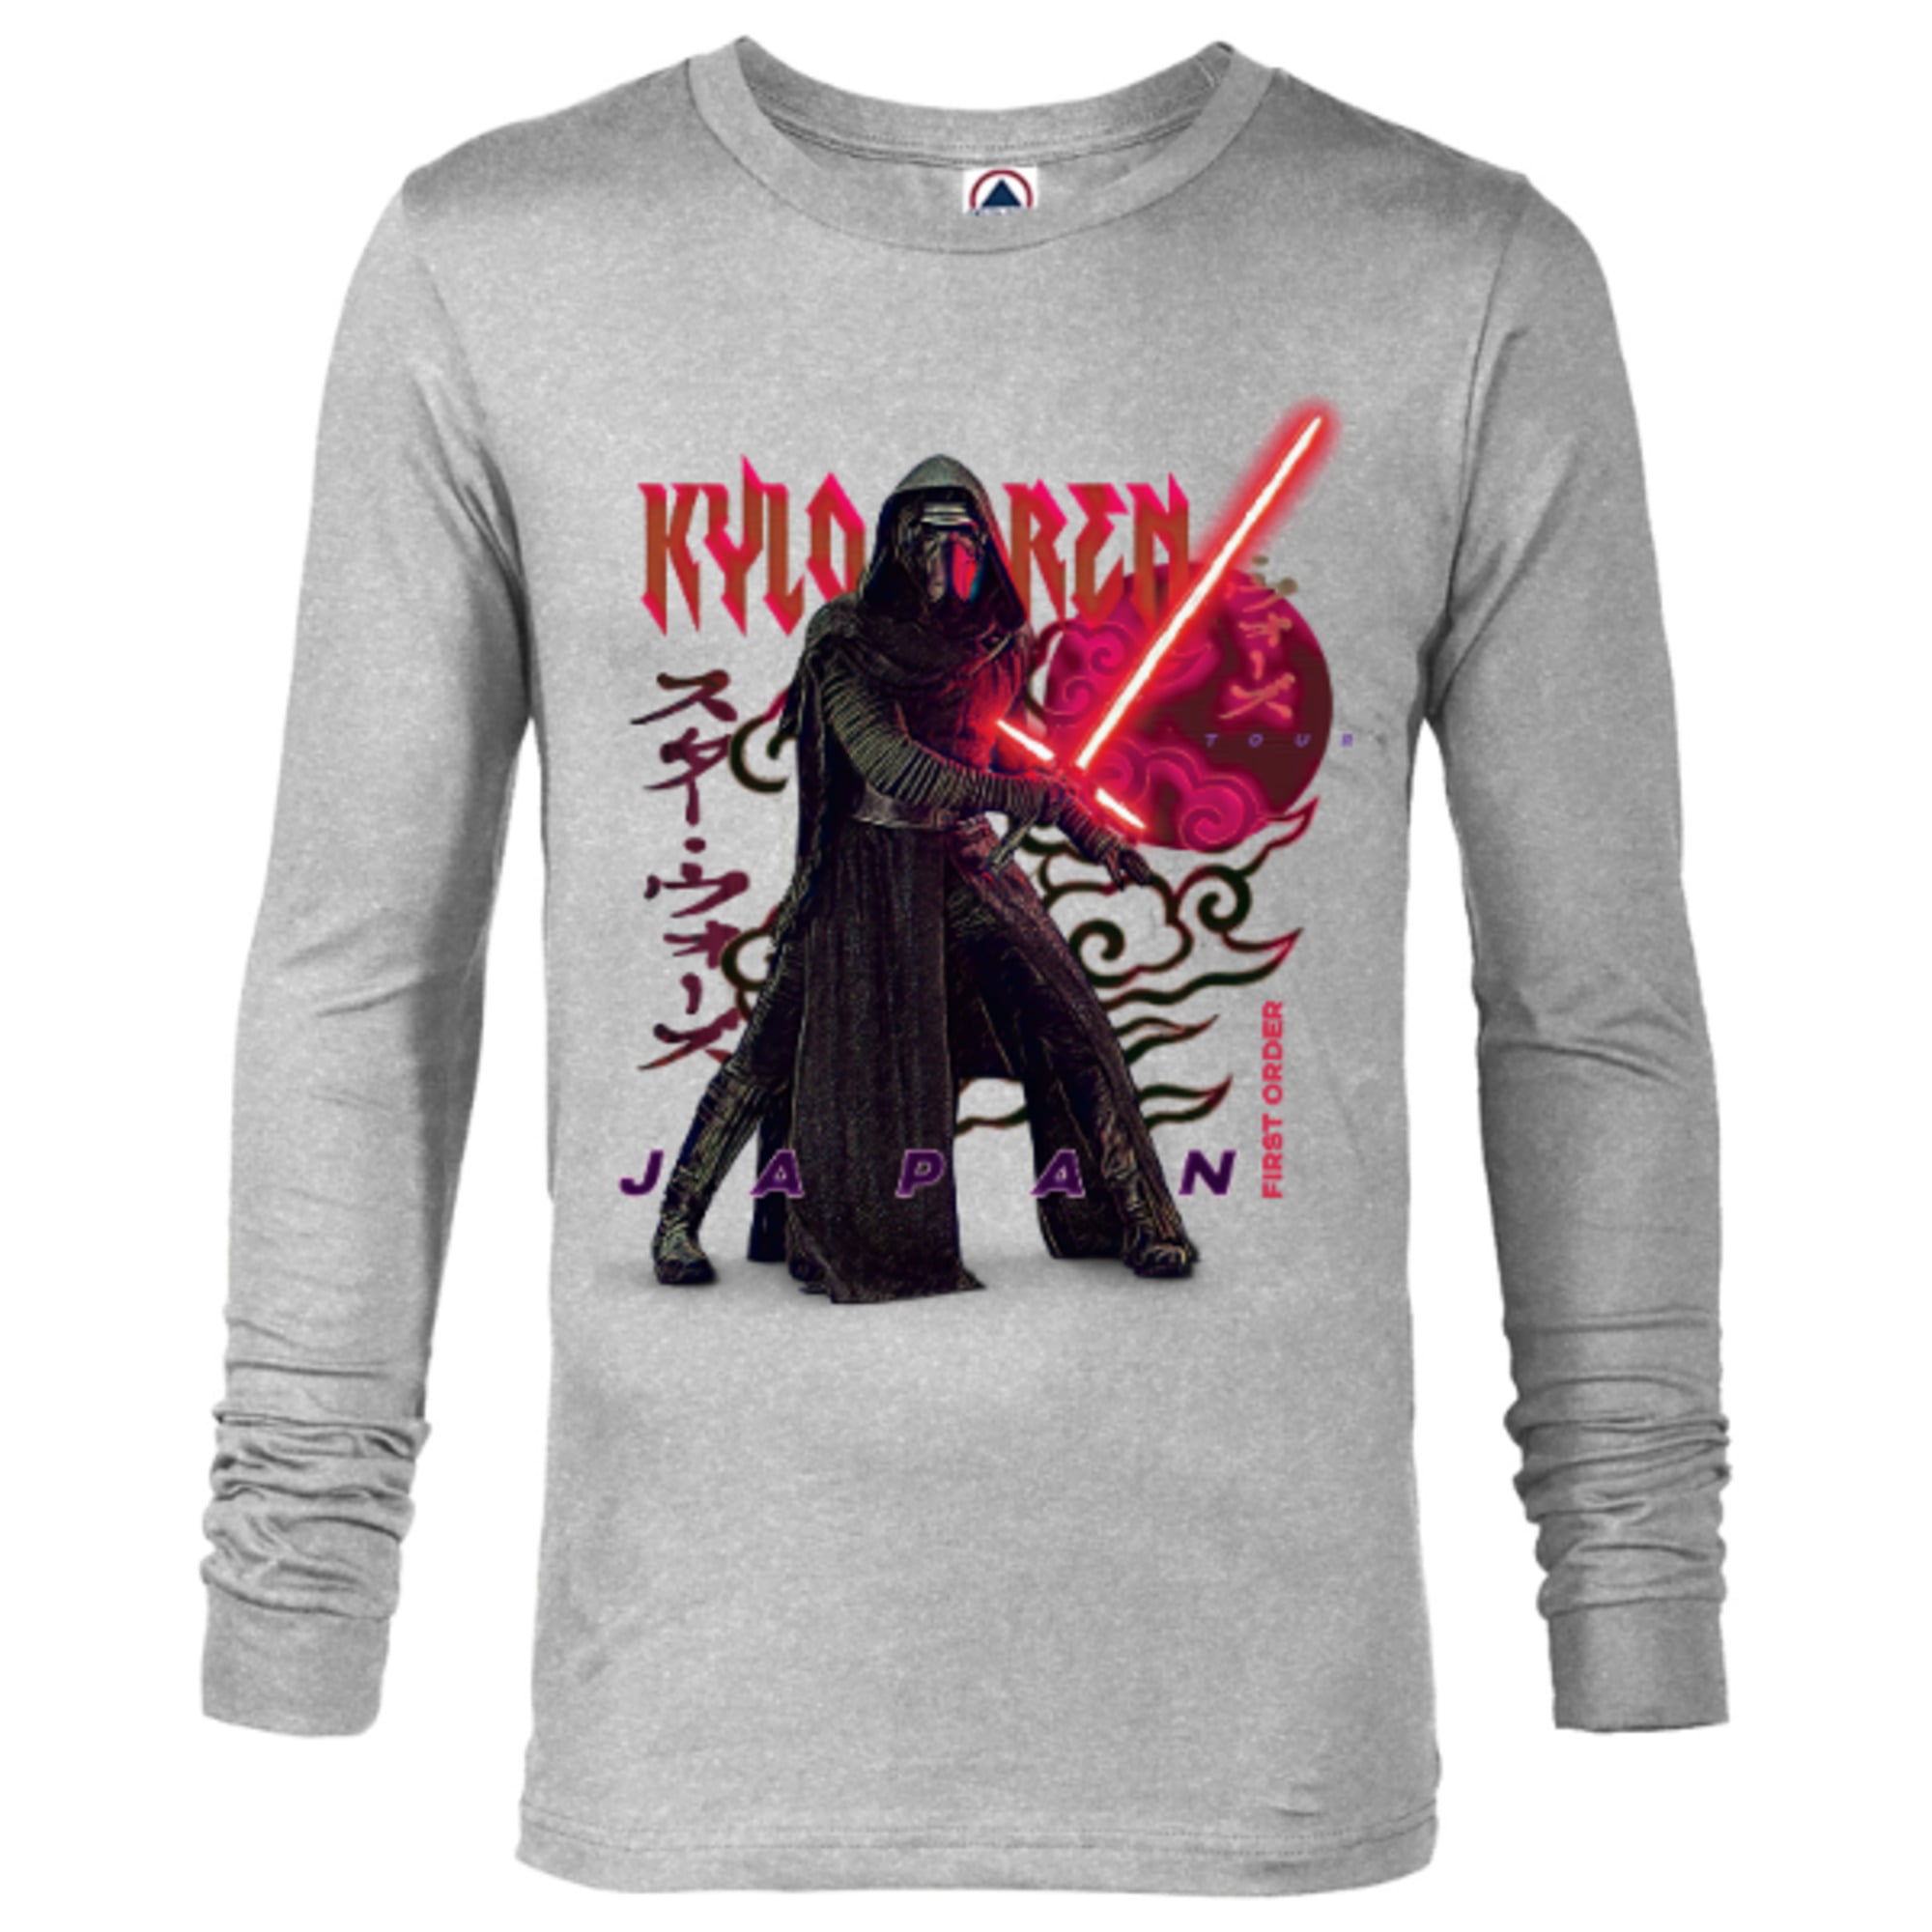 Official Disney Star Wars Long Sleeve Black T Shirt Top Printed Kylo Ren Age 4 